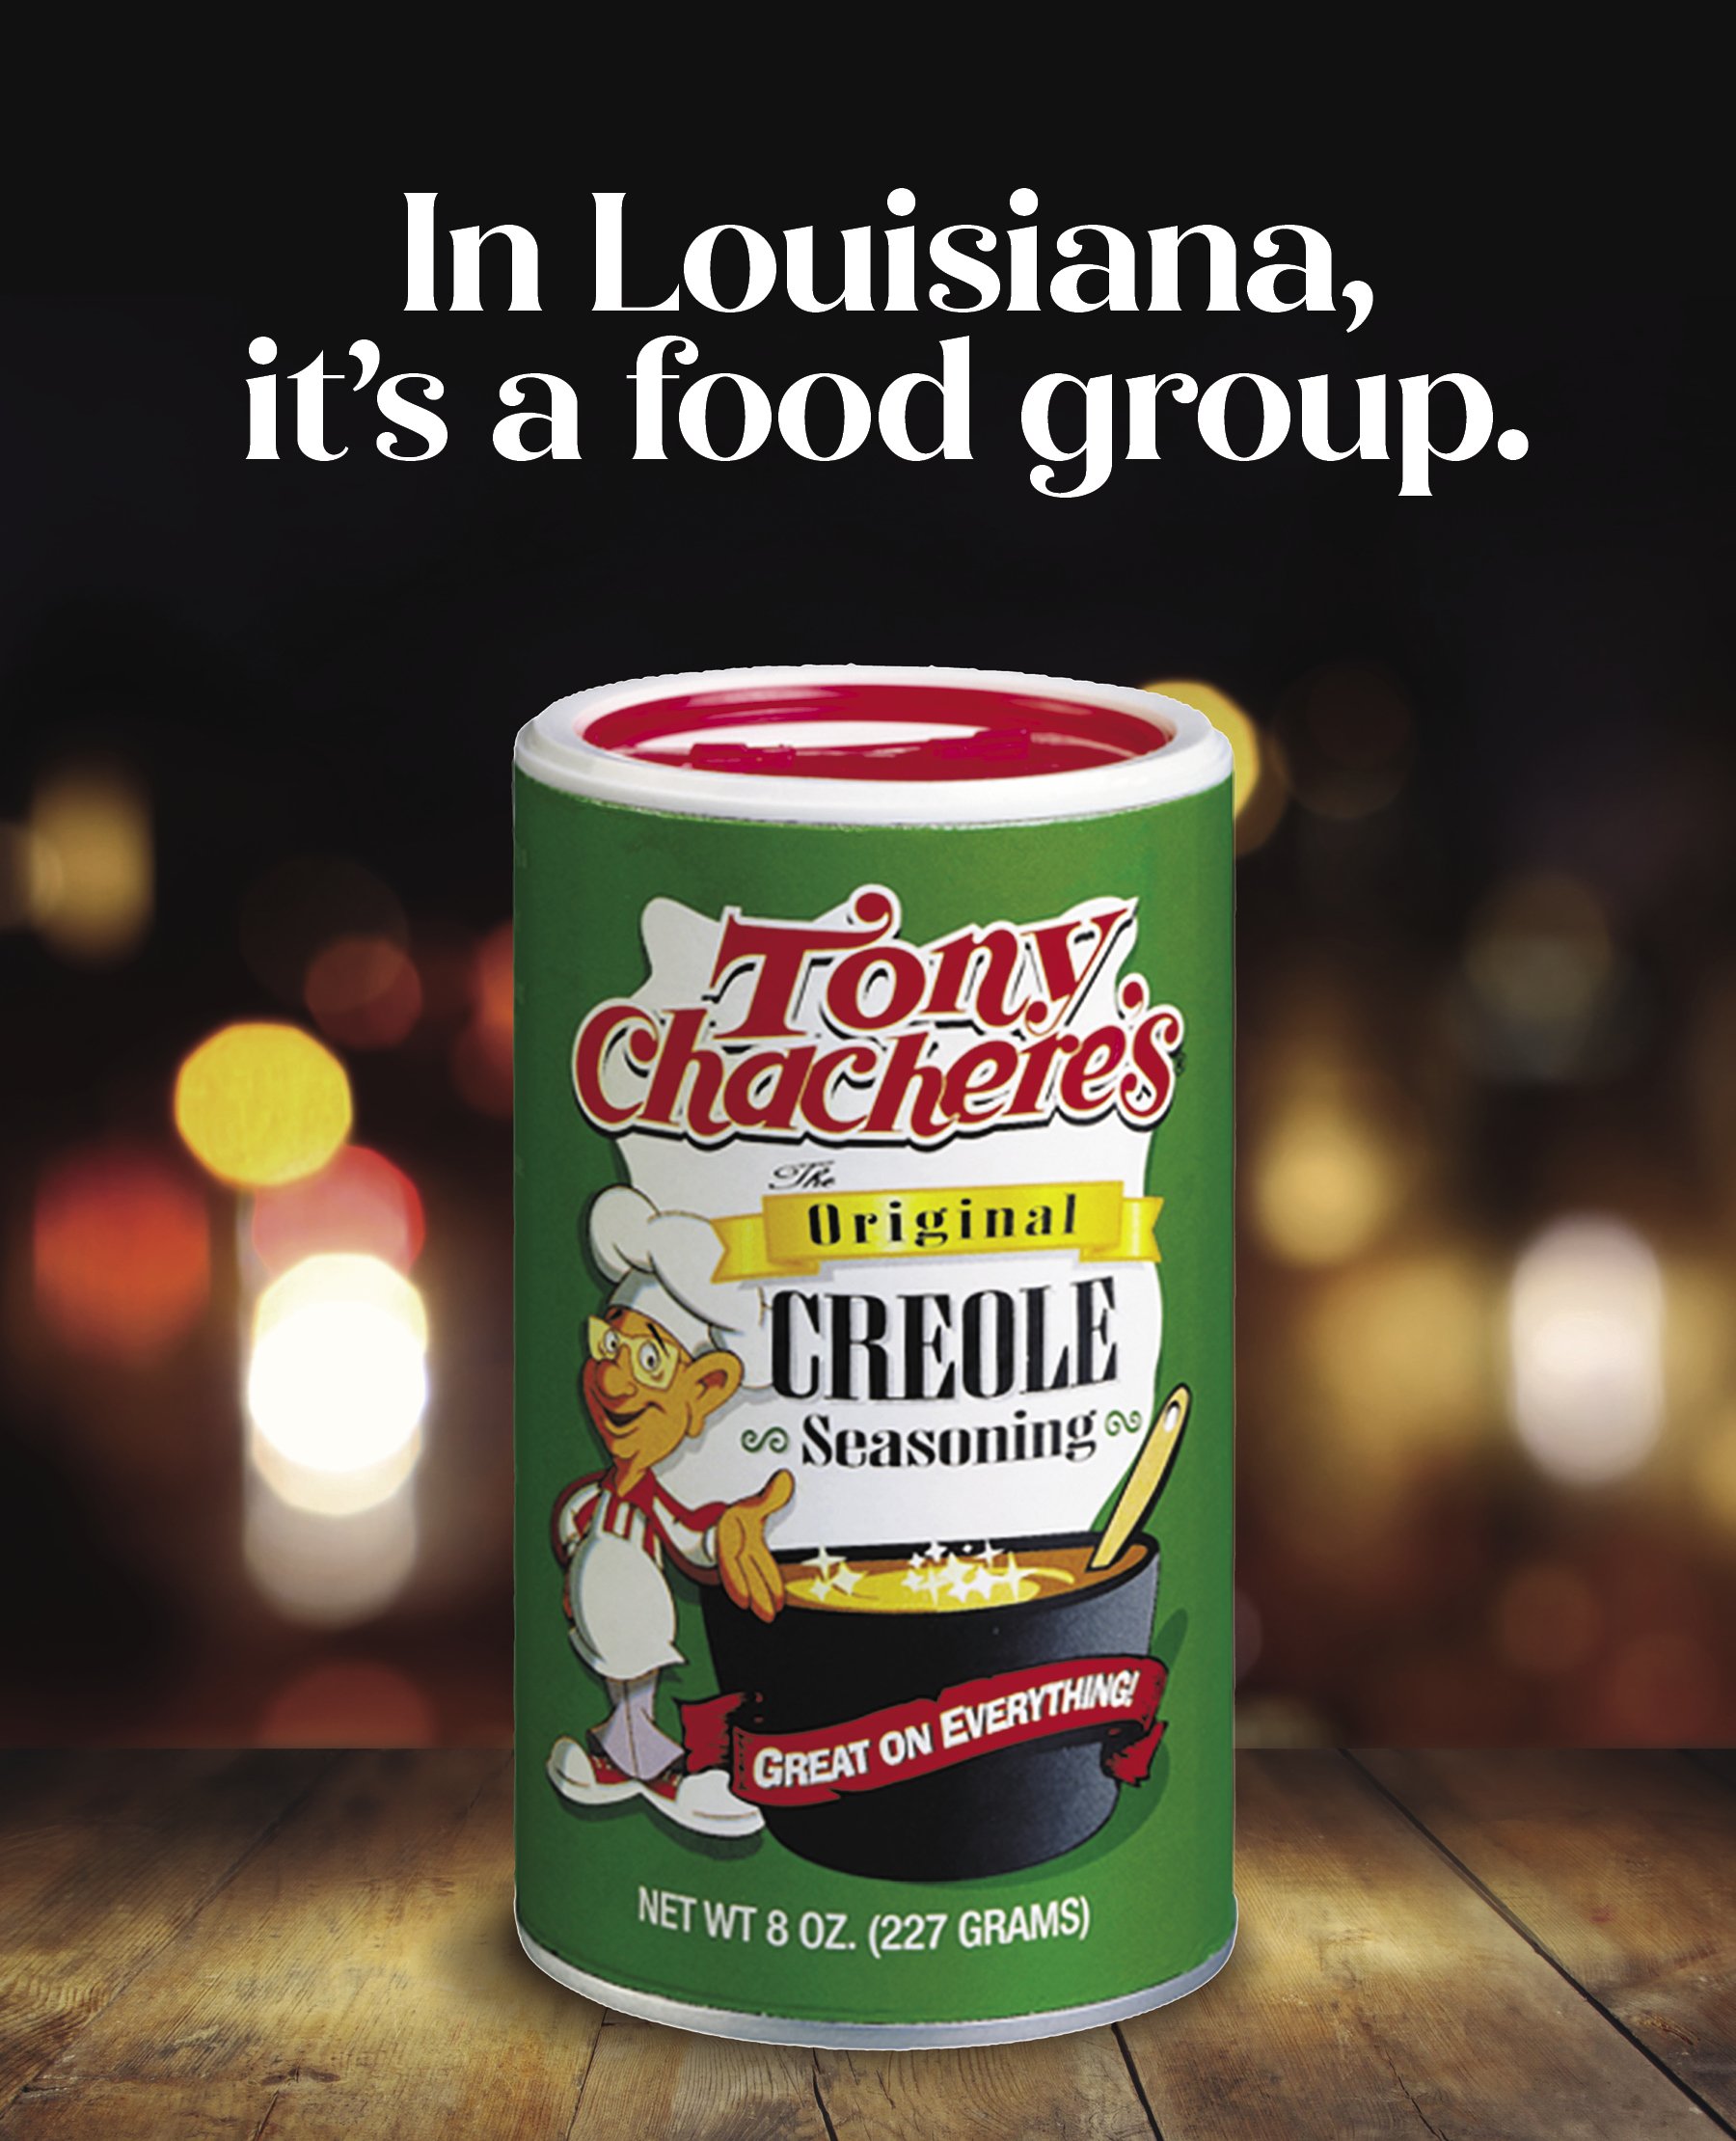  Tony Chachere's Original Creole Seasoning 8 Oz (Pack